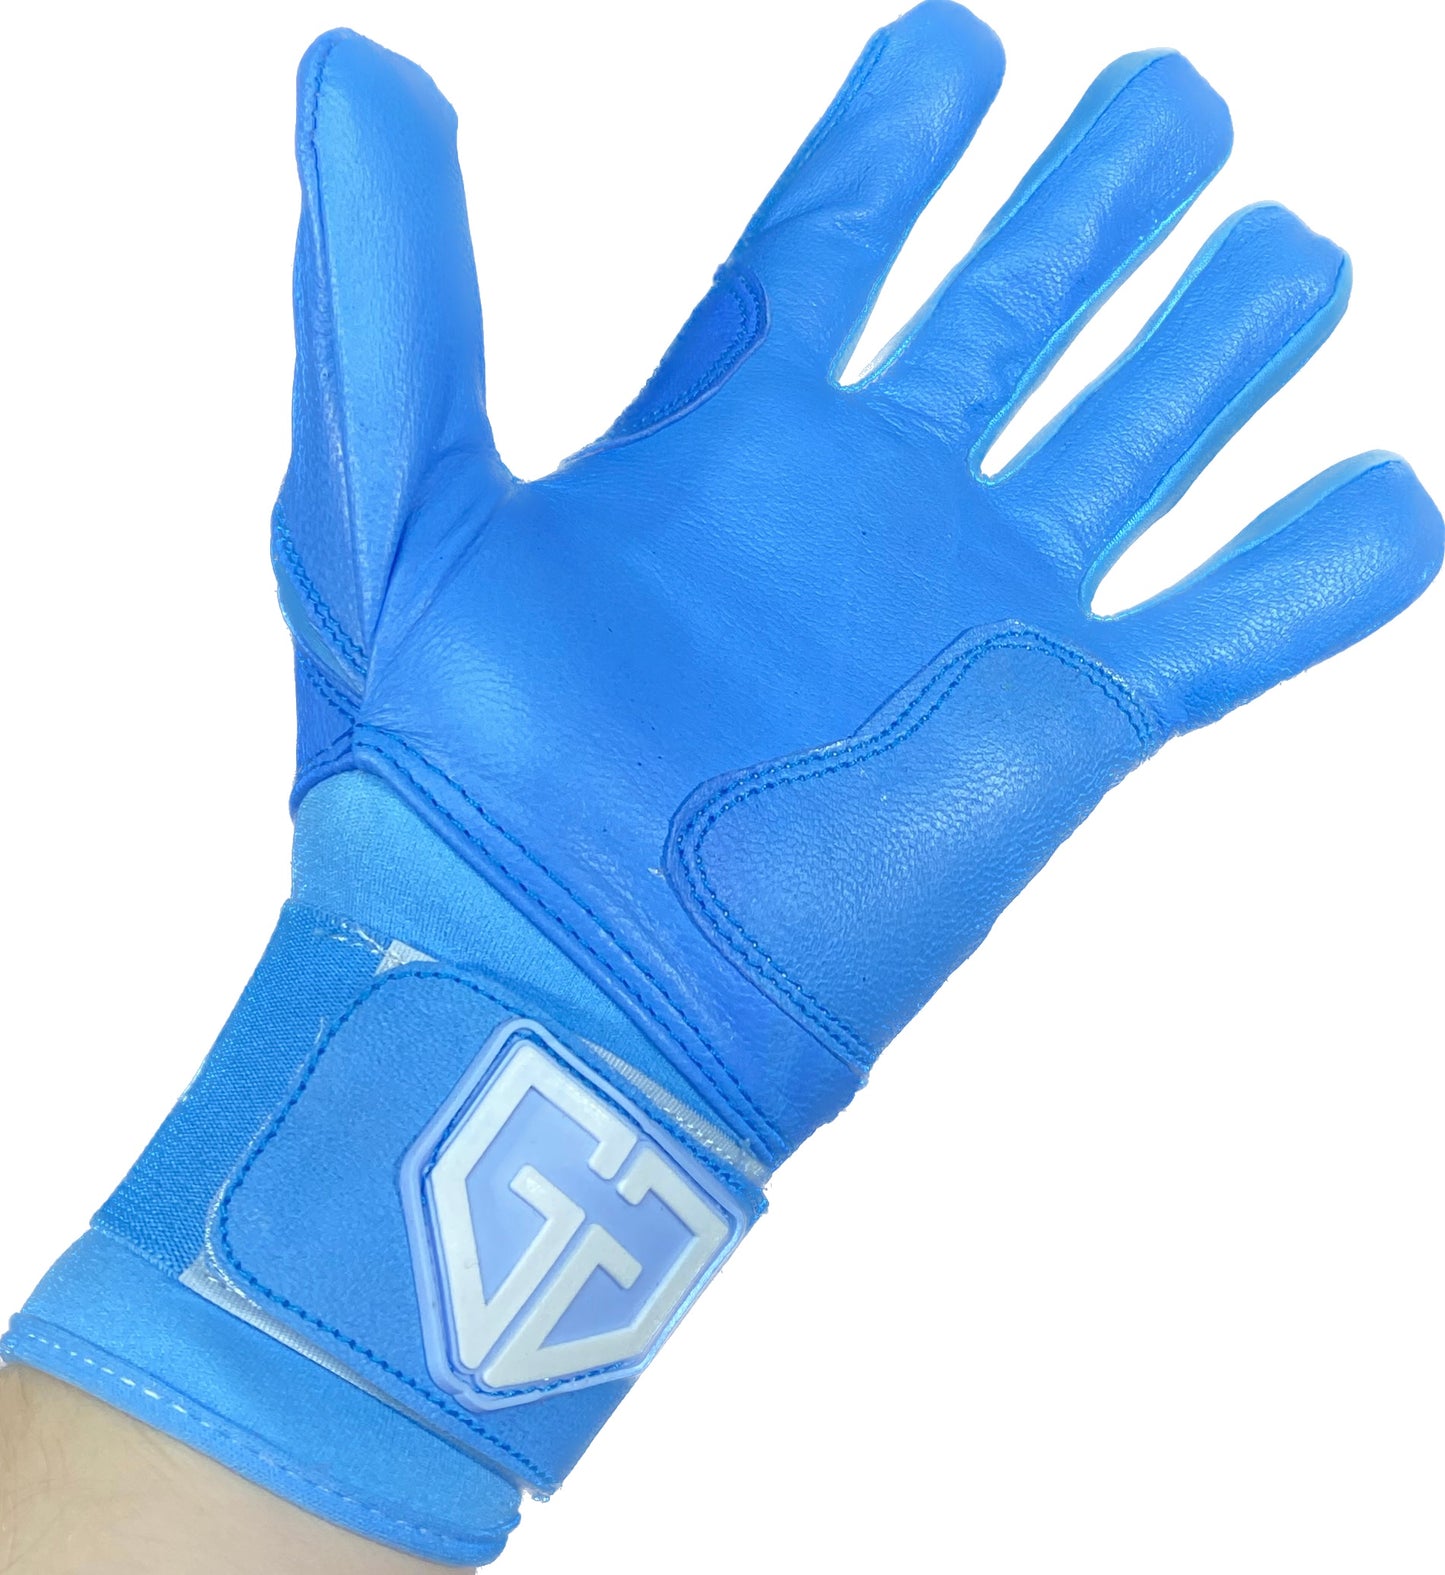 Extended Cuff Cabretta Batting Gloves Baby Blue